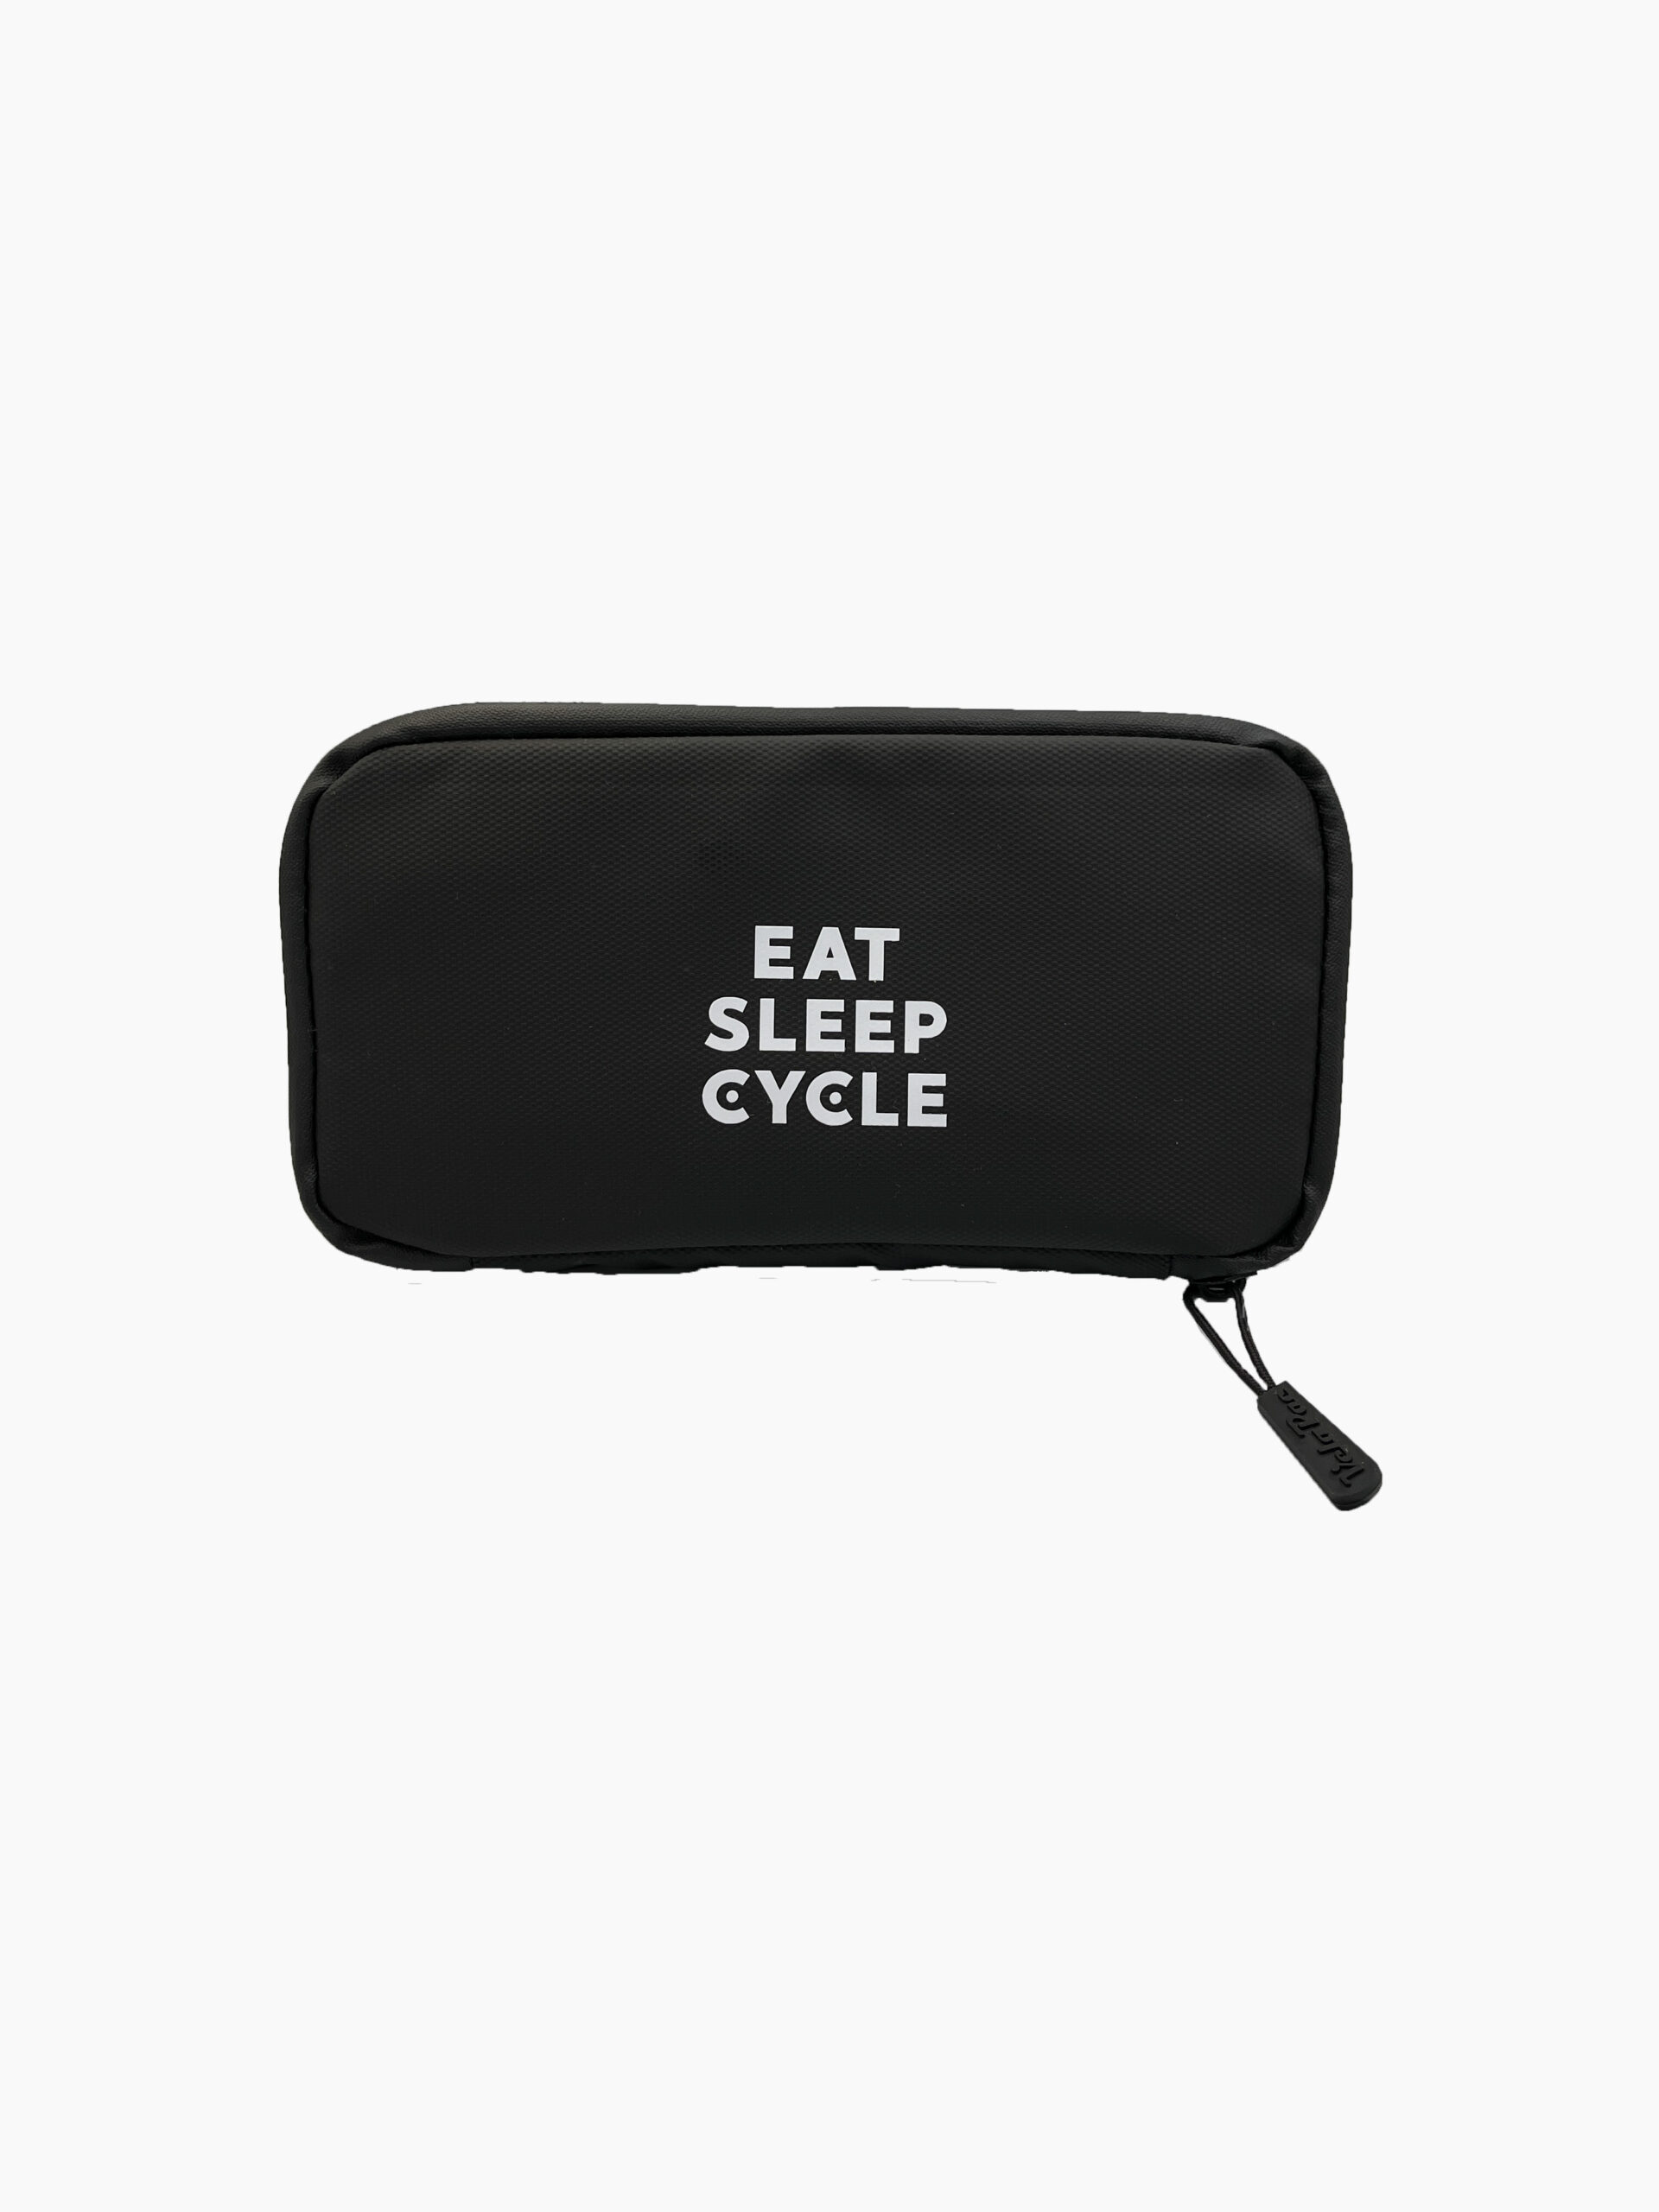 Eat Sleep Cycle Cycling Wallet | Phone Case | Velopac Max Slim